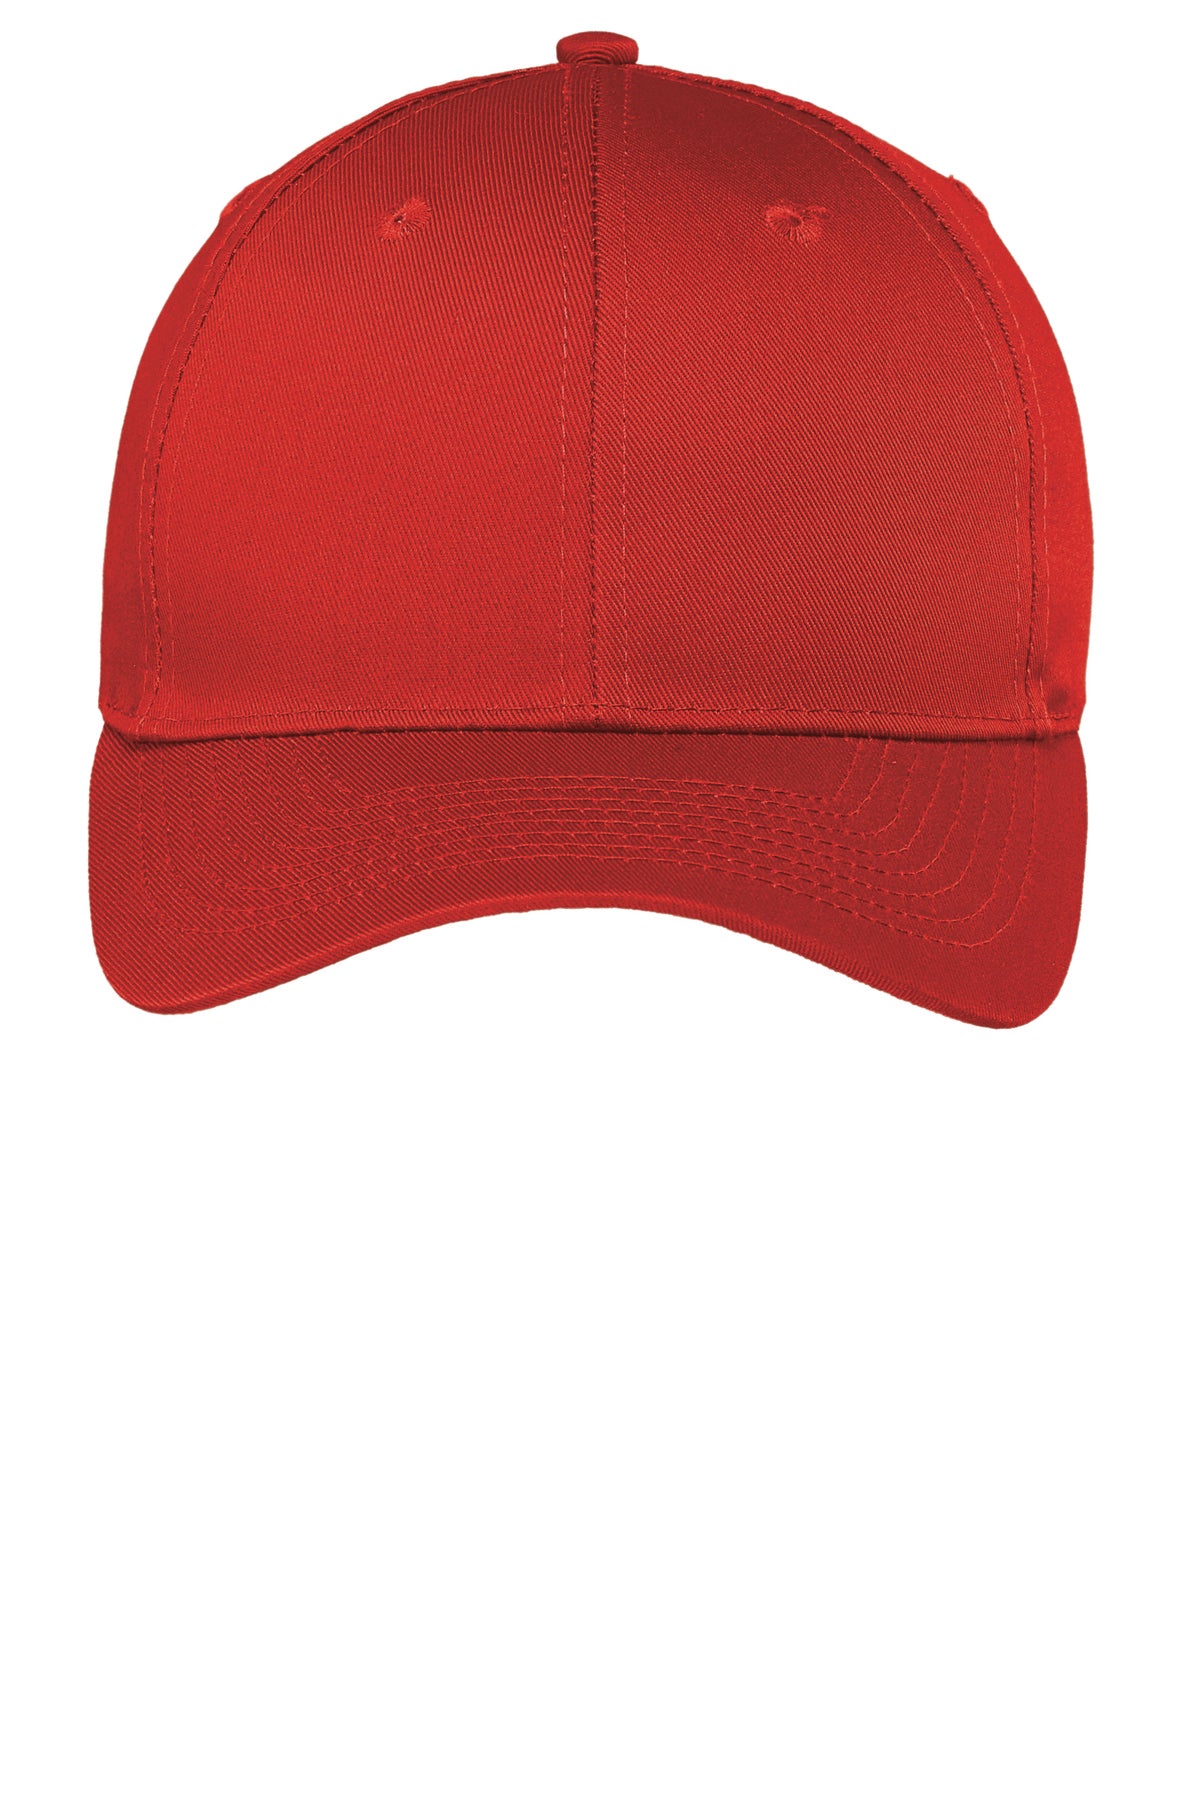 Port Authority Easy Care Cap. C608 - Red